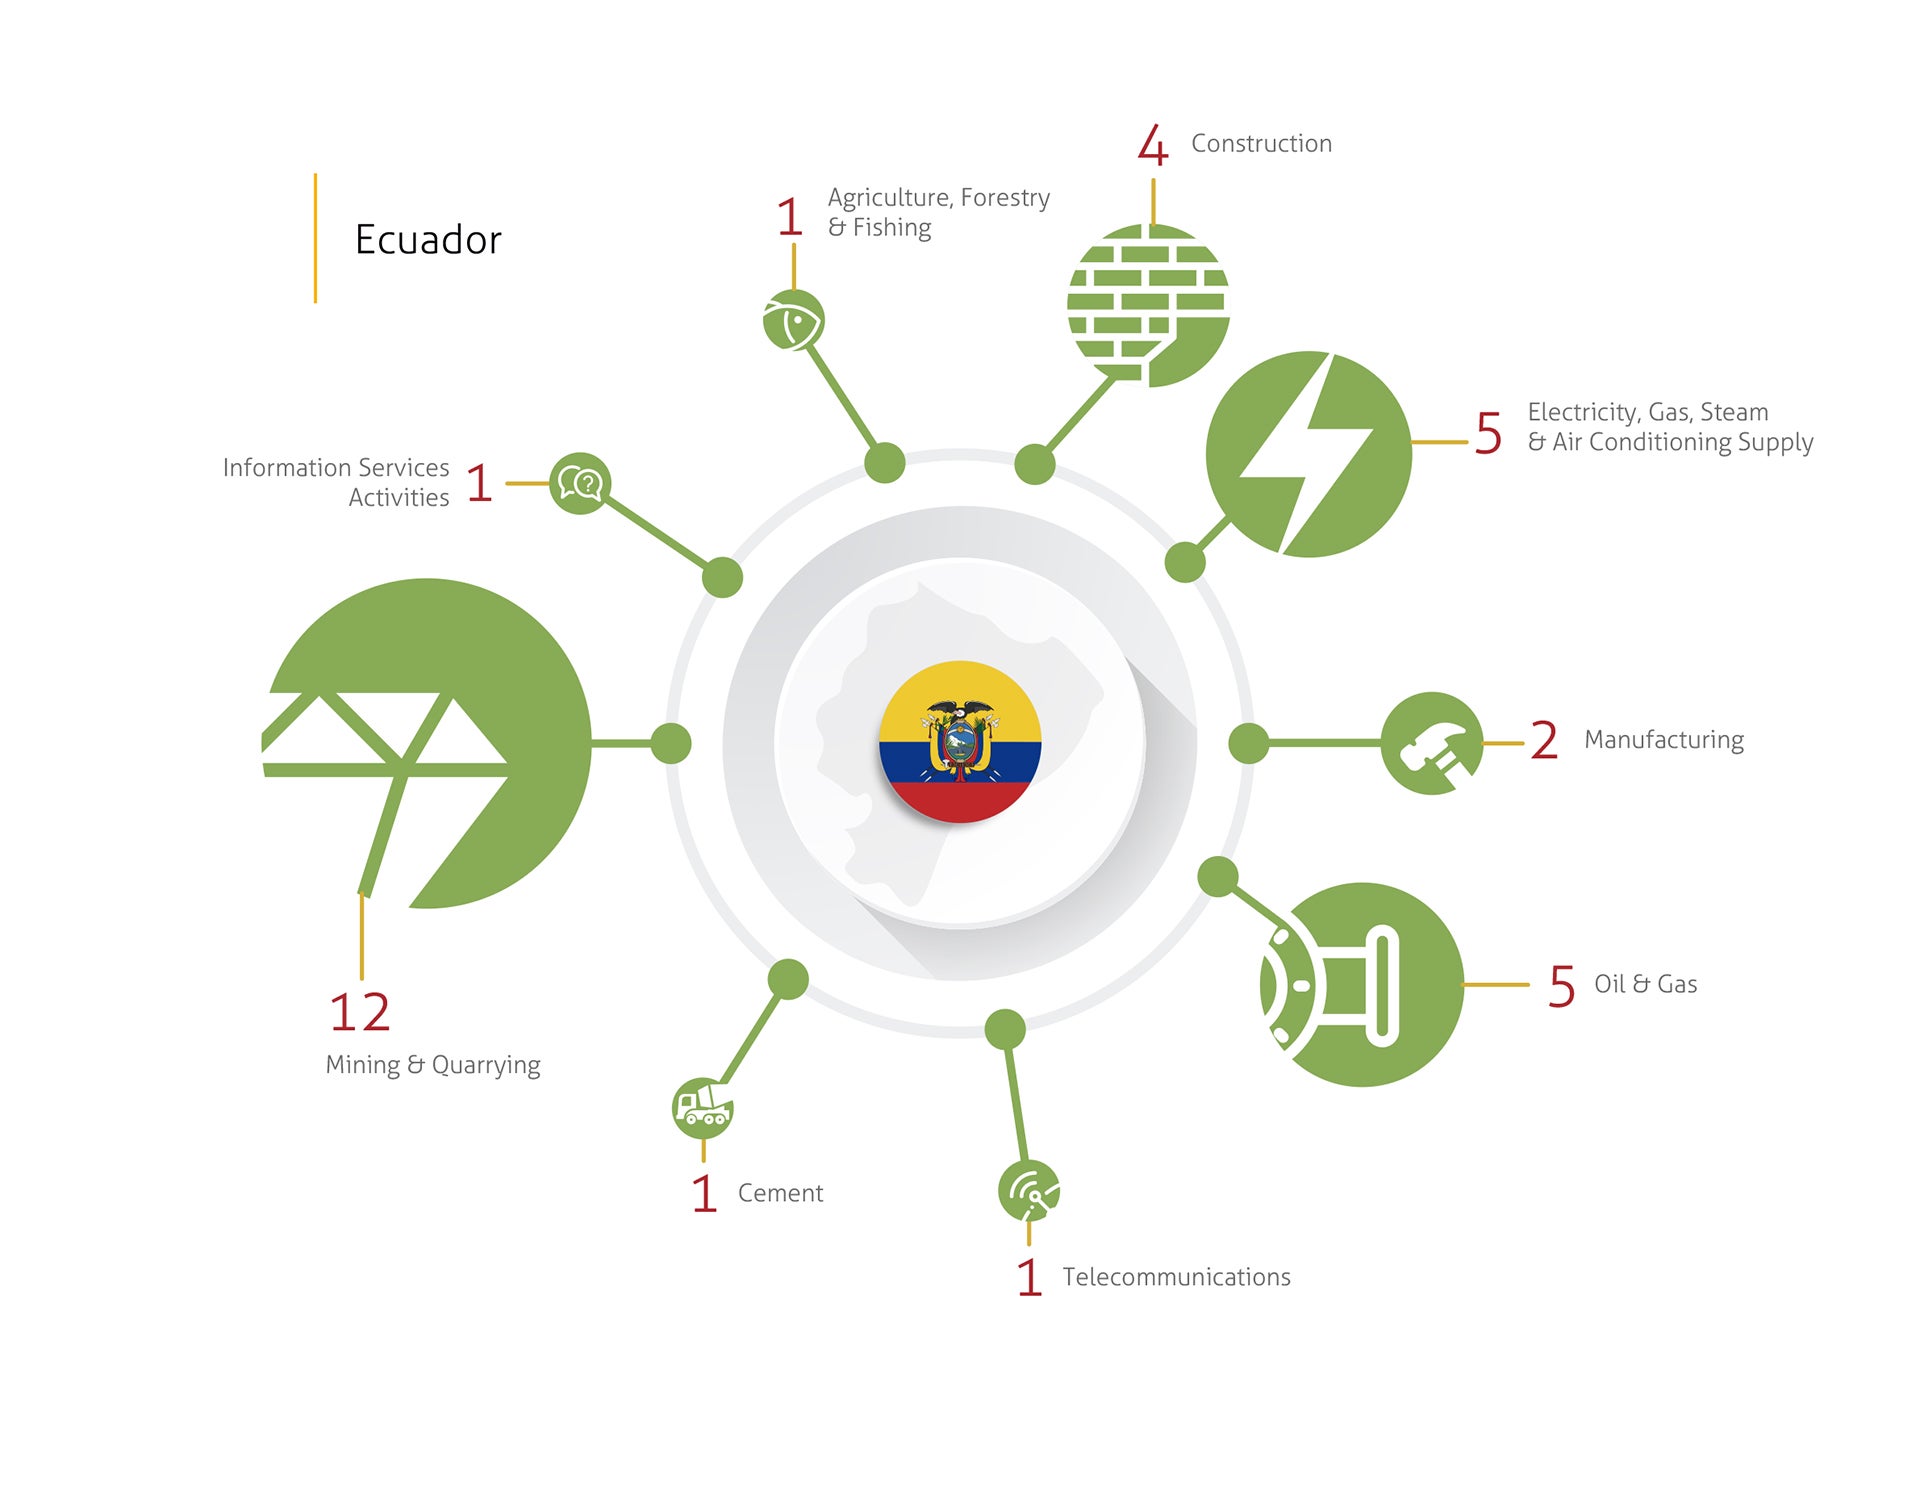 Industries involved in disputes - Ecuador